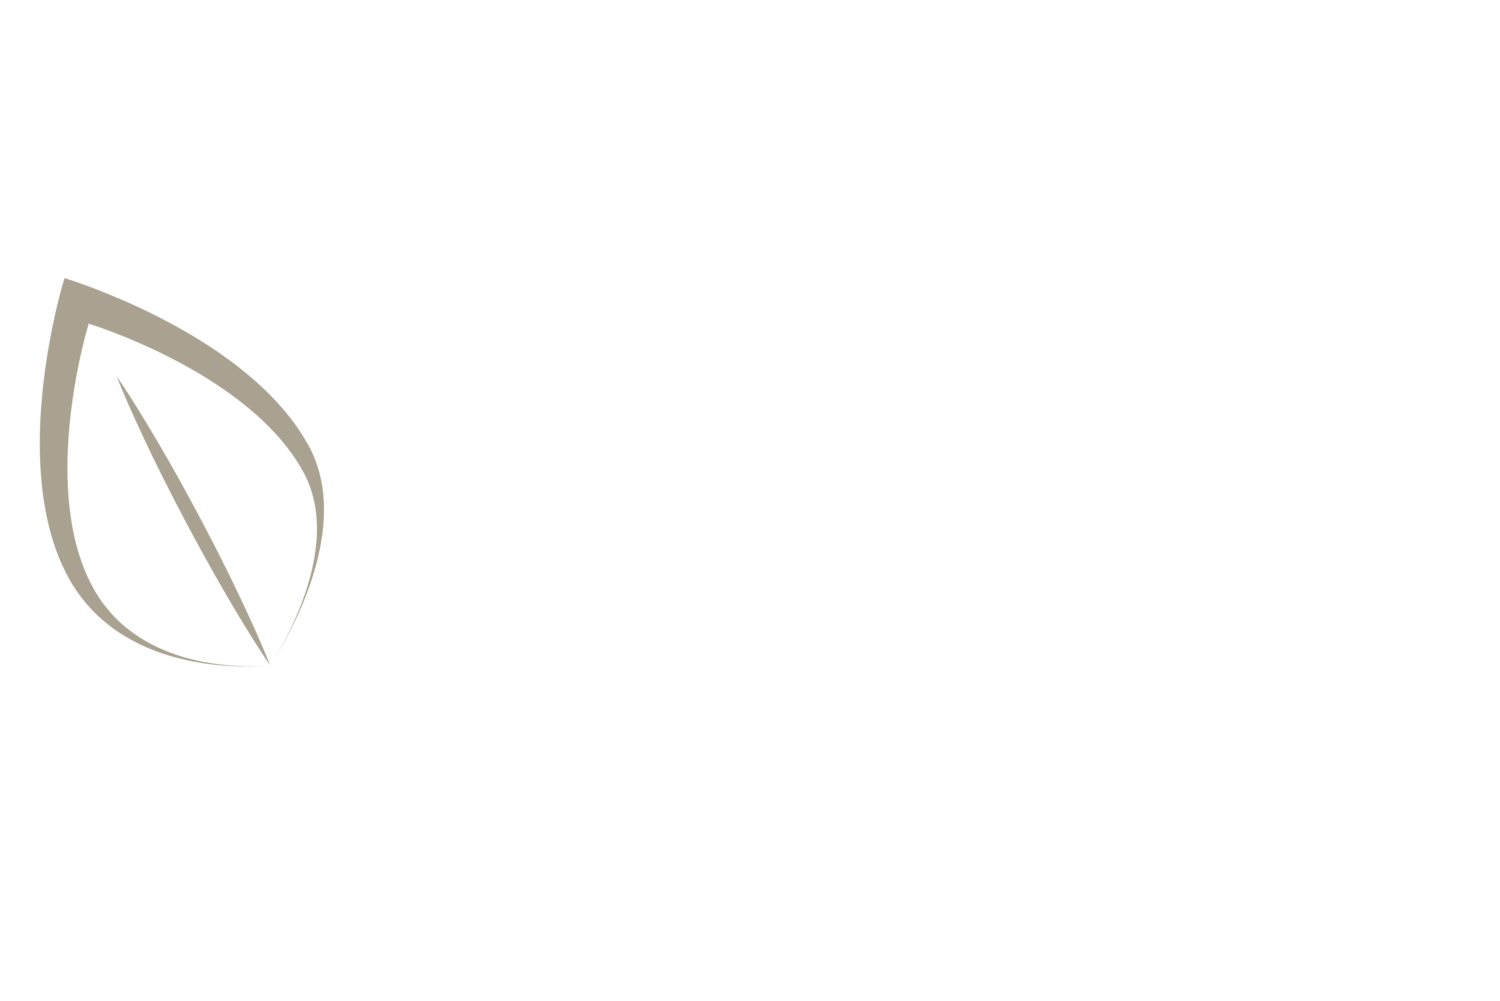 West Coast Nurse Practitioner